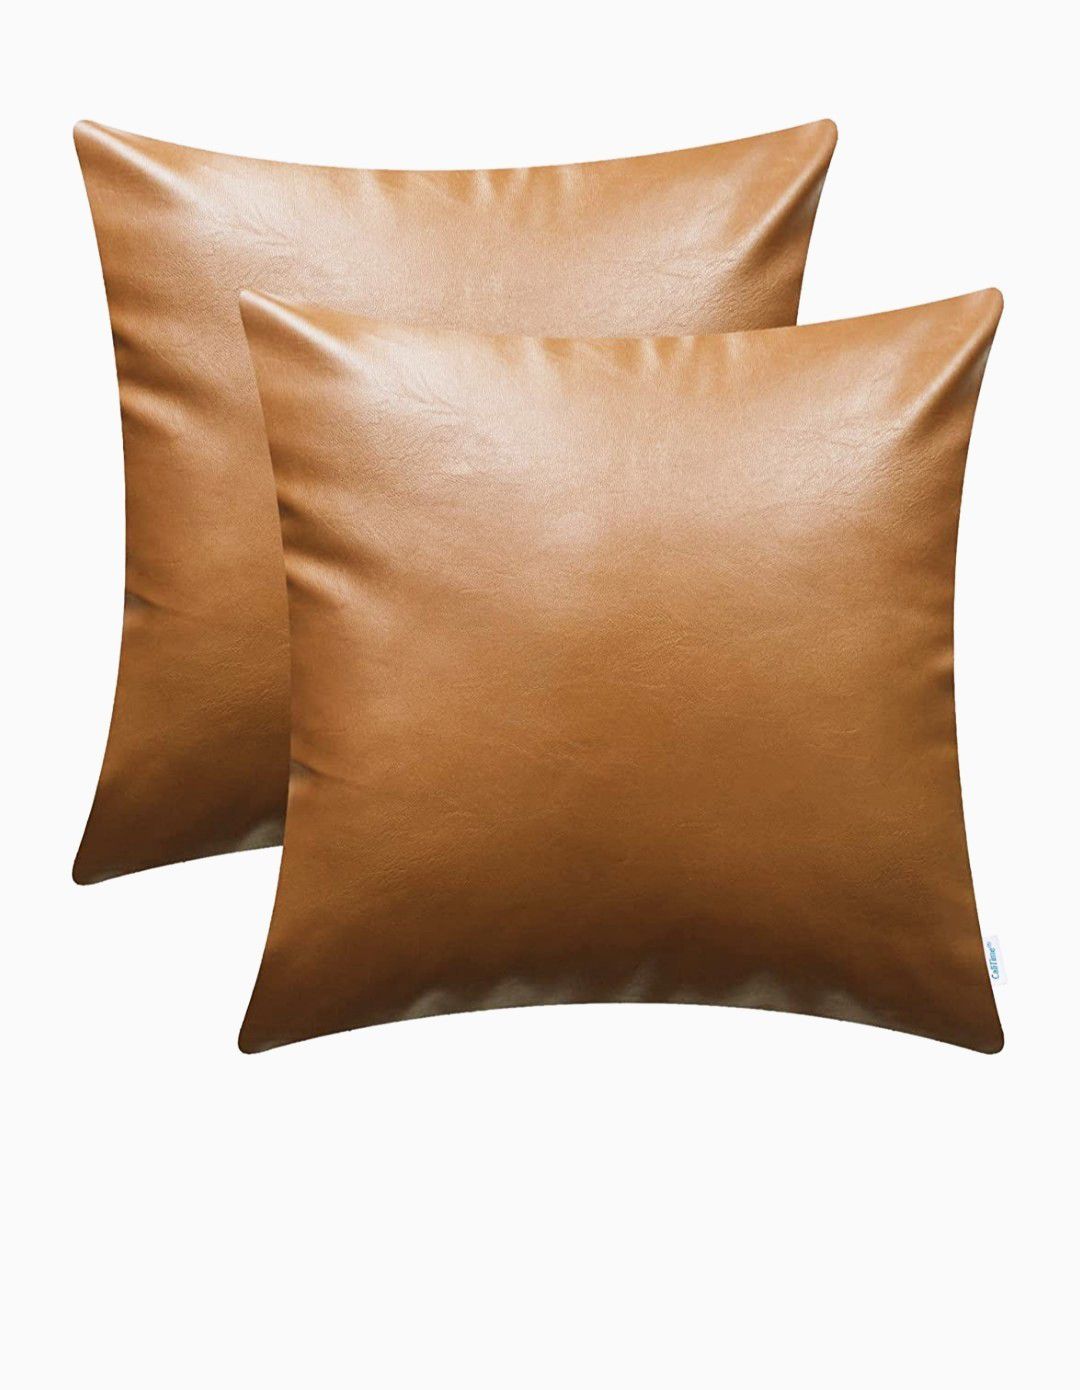 New set of 2) 18" faux leather cognac tan pillow case covers modern farmhouse boho home decor